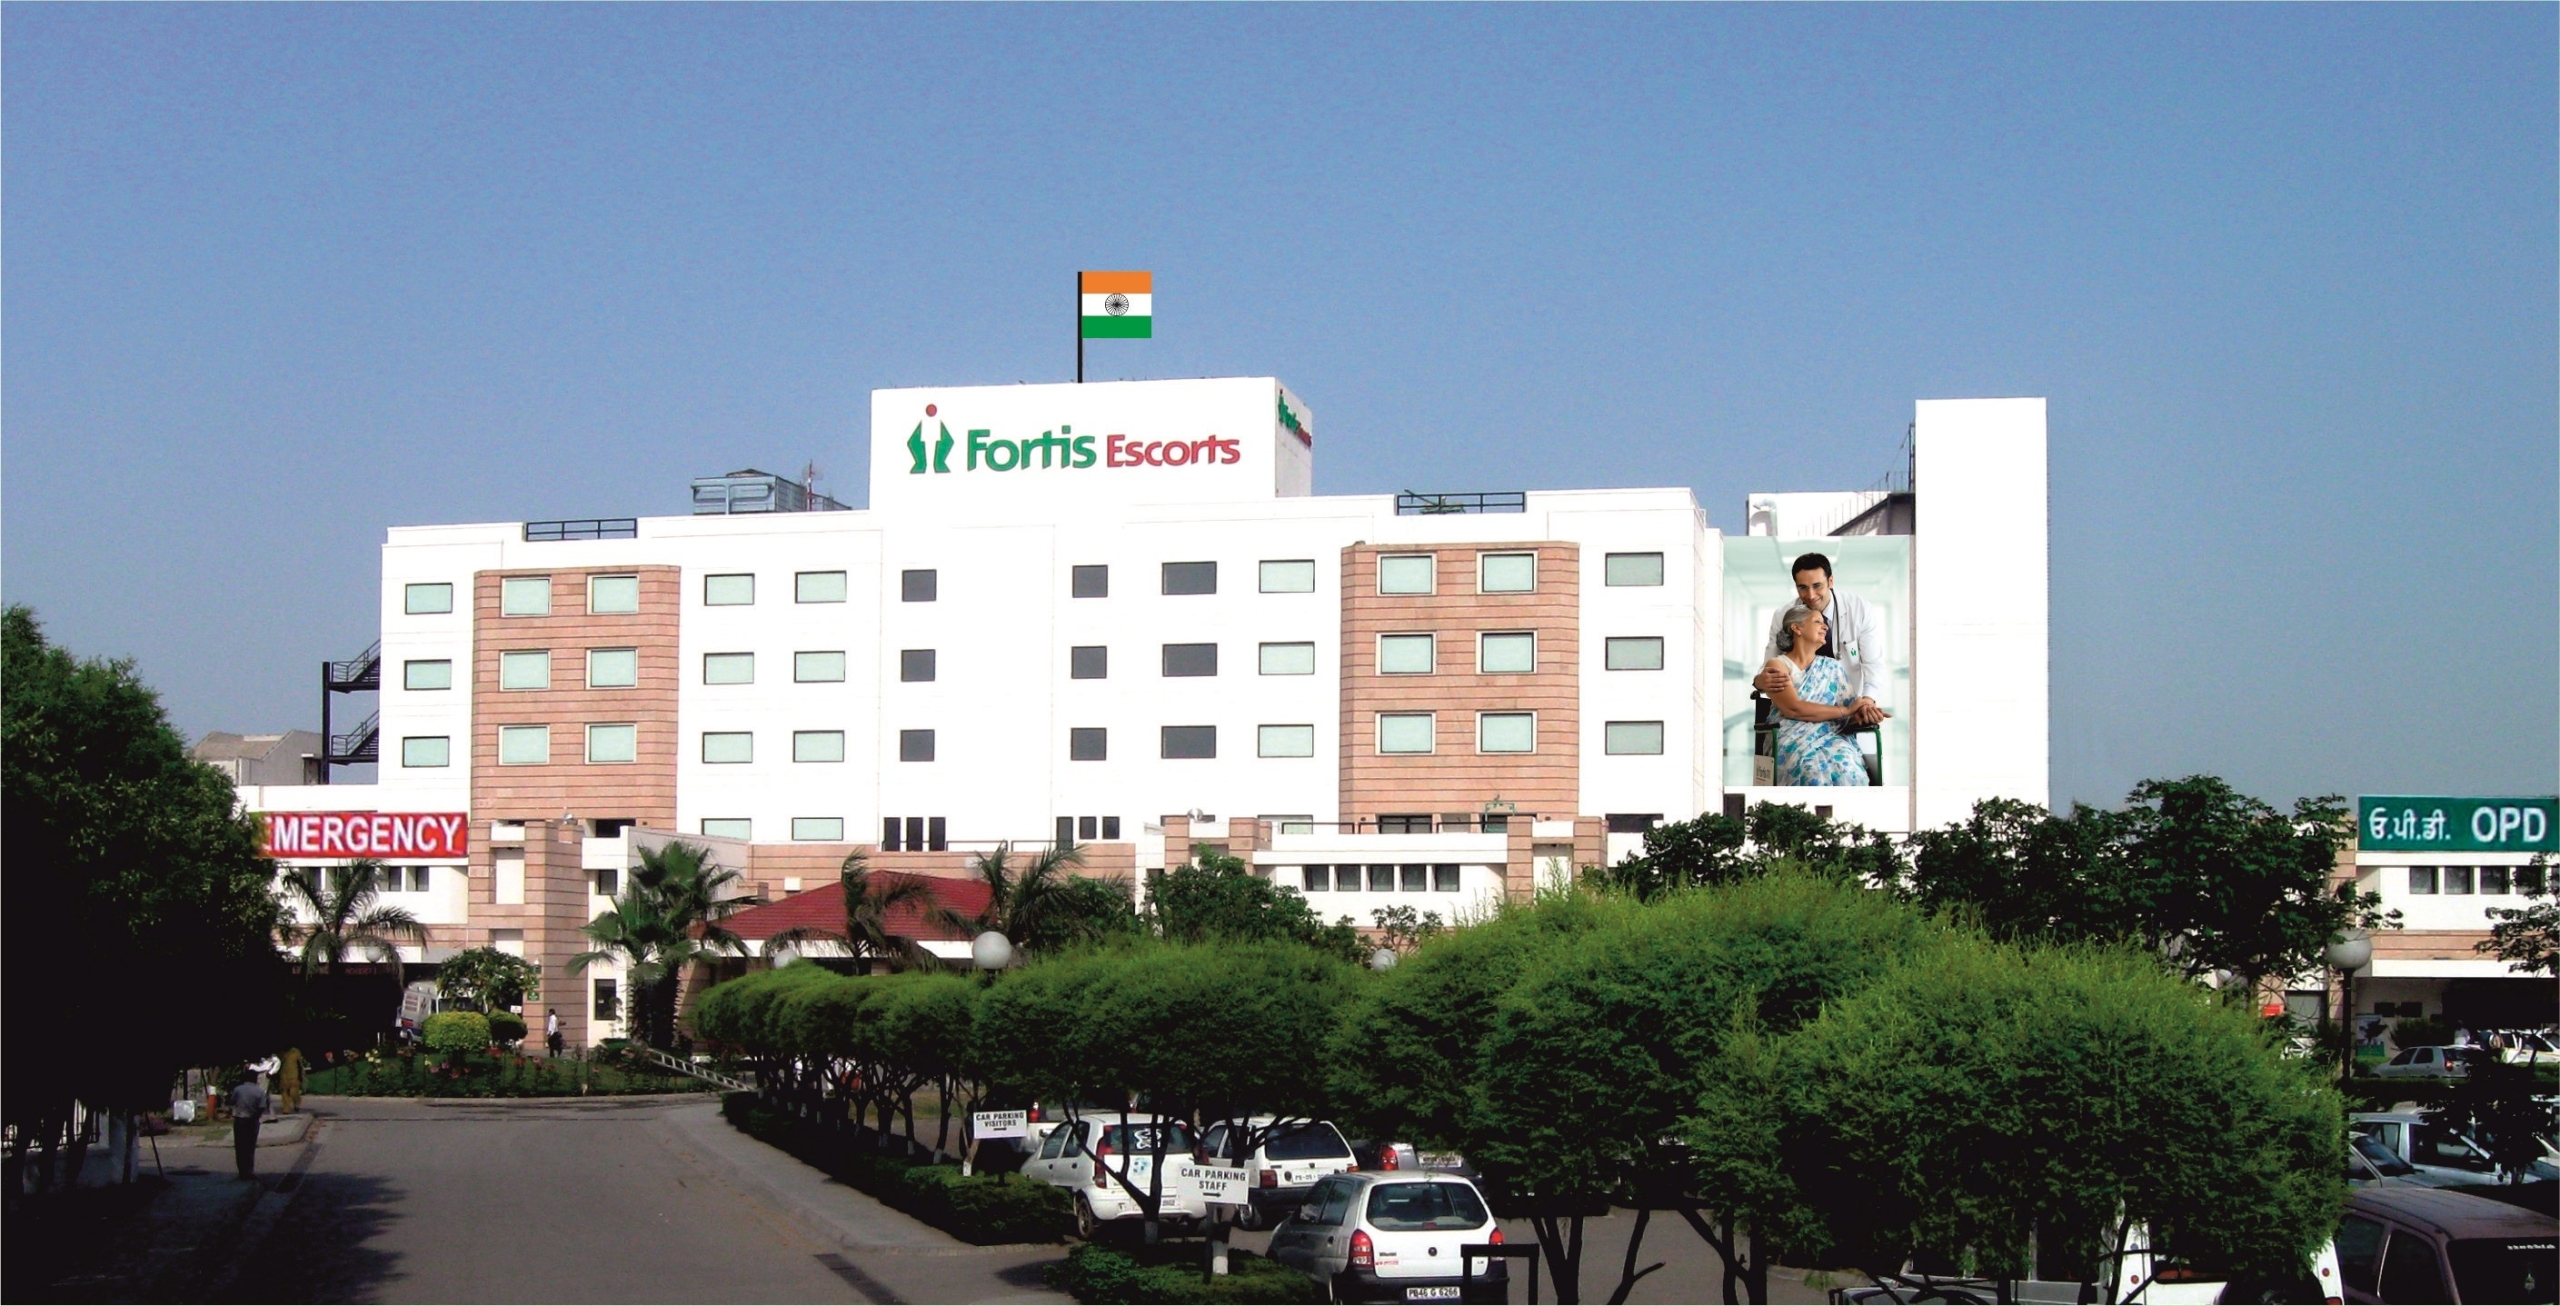 Fortis Escorts Hospital, Amritsar, Punjab